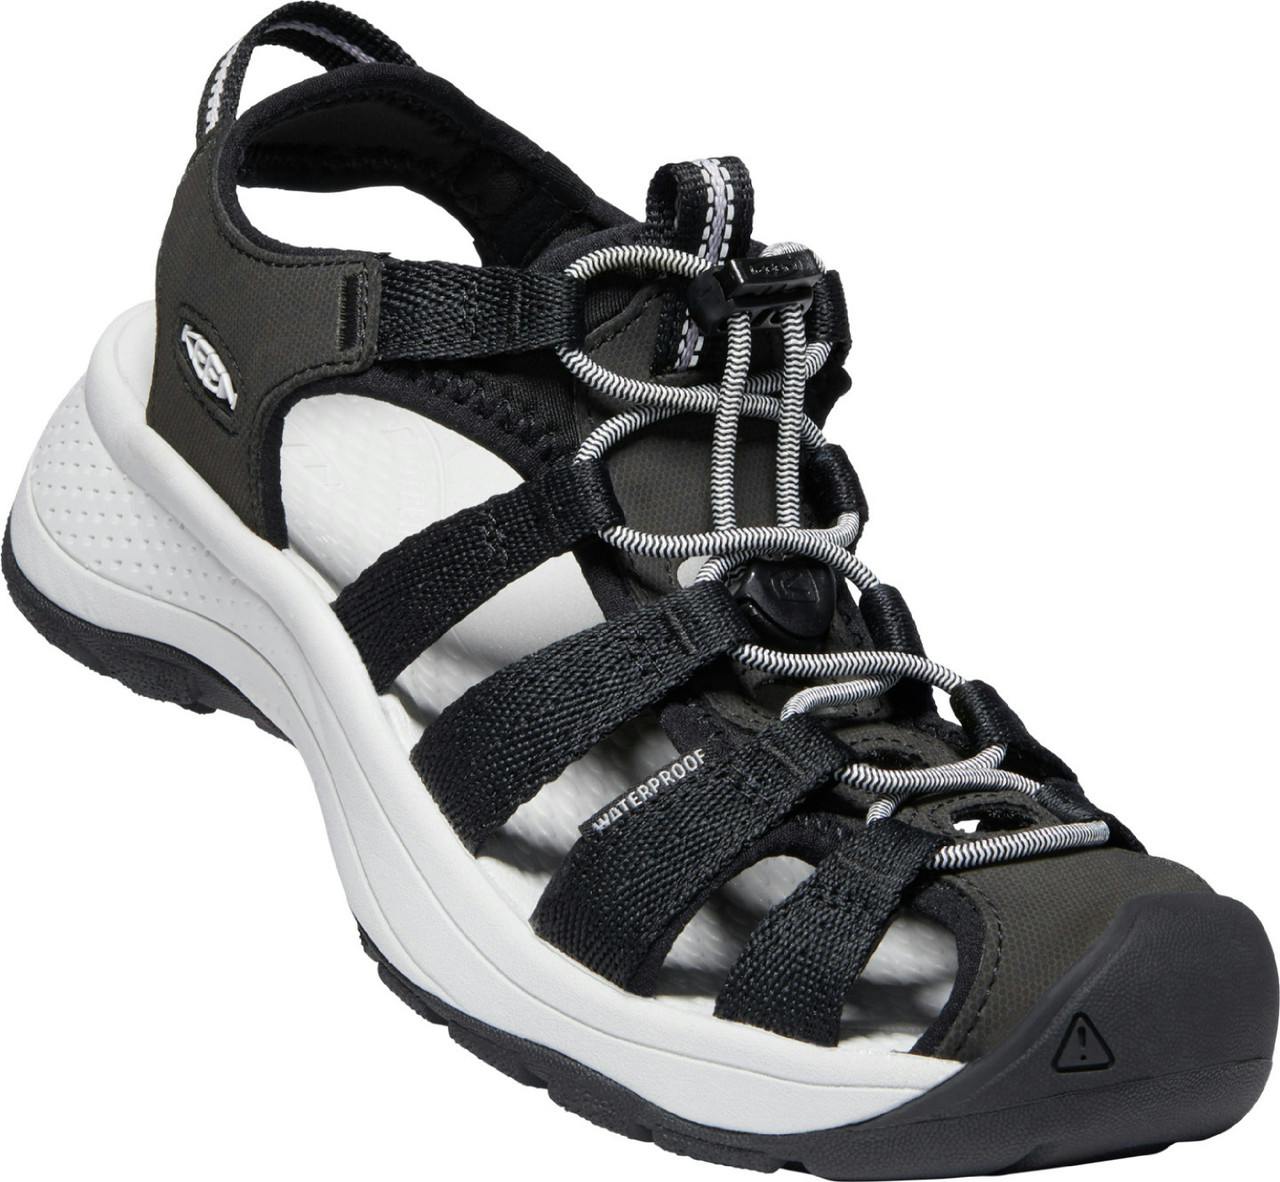 Astoria West Sandals Black/Grey